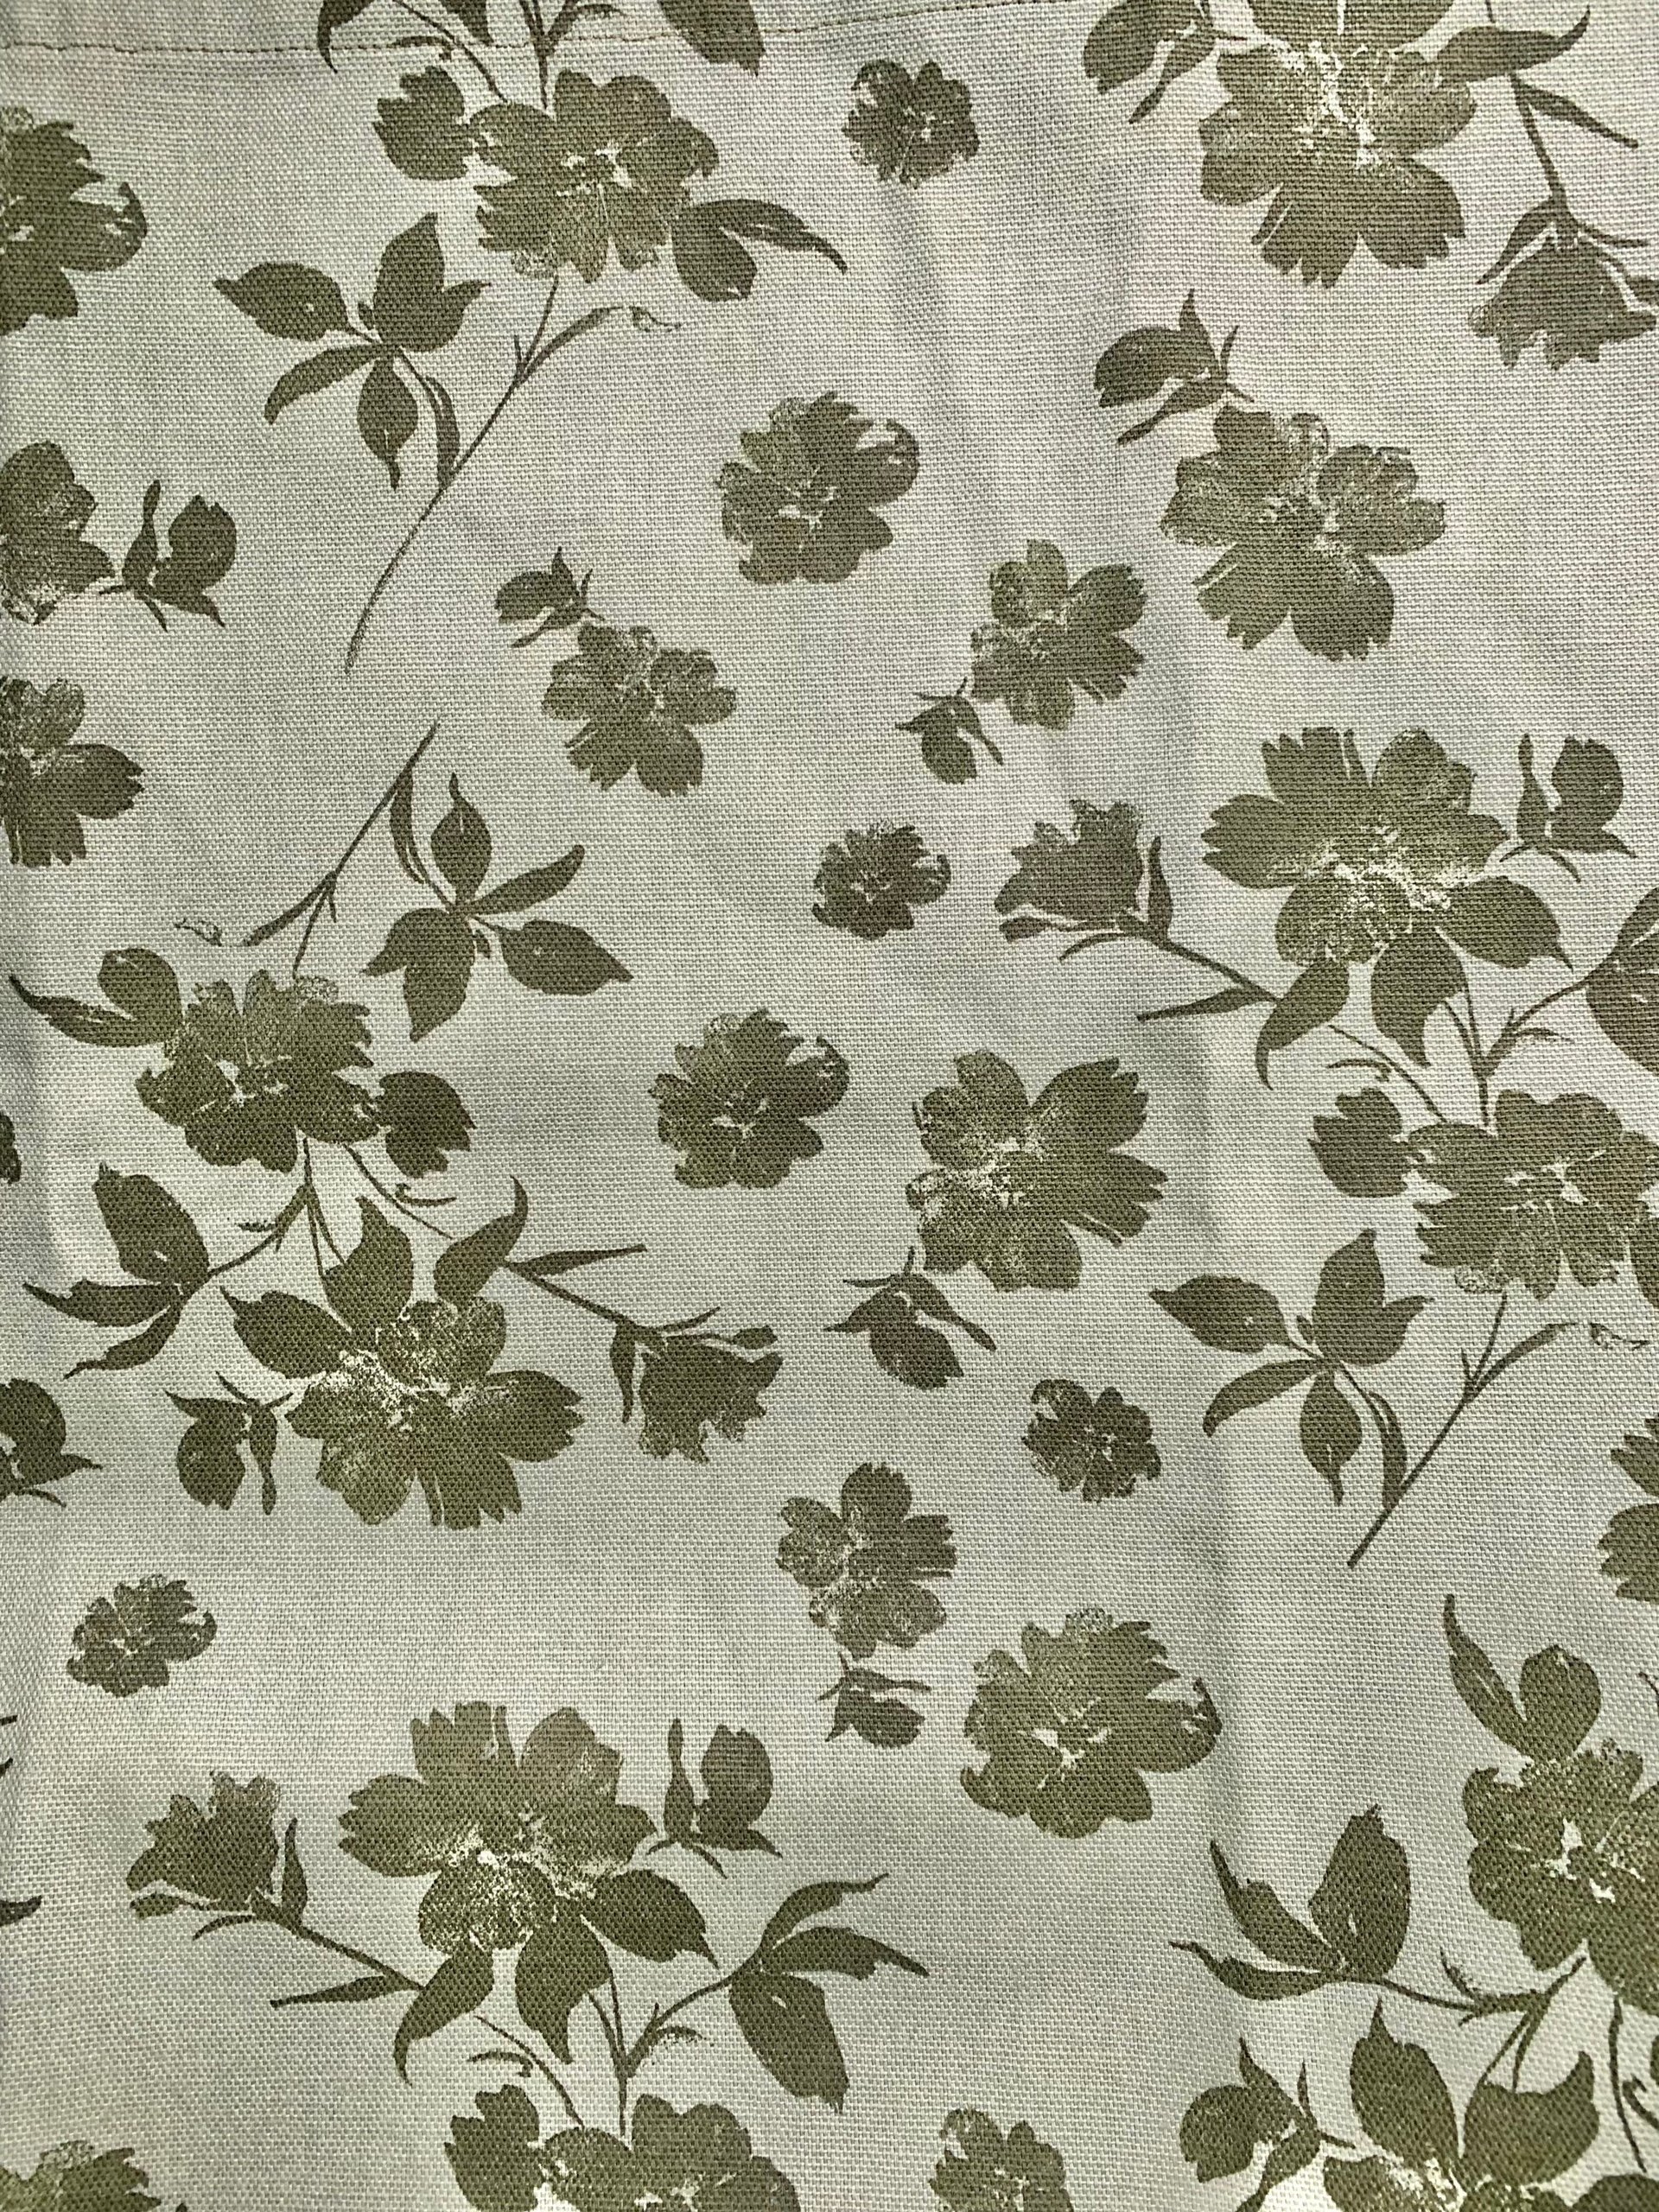 Green FloralChef Towel || Nature Inspired Kitchen Towel